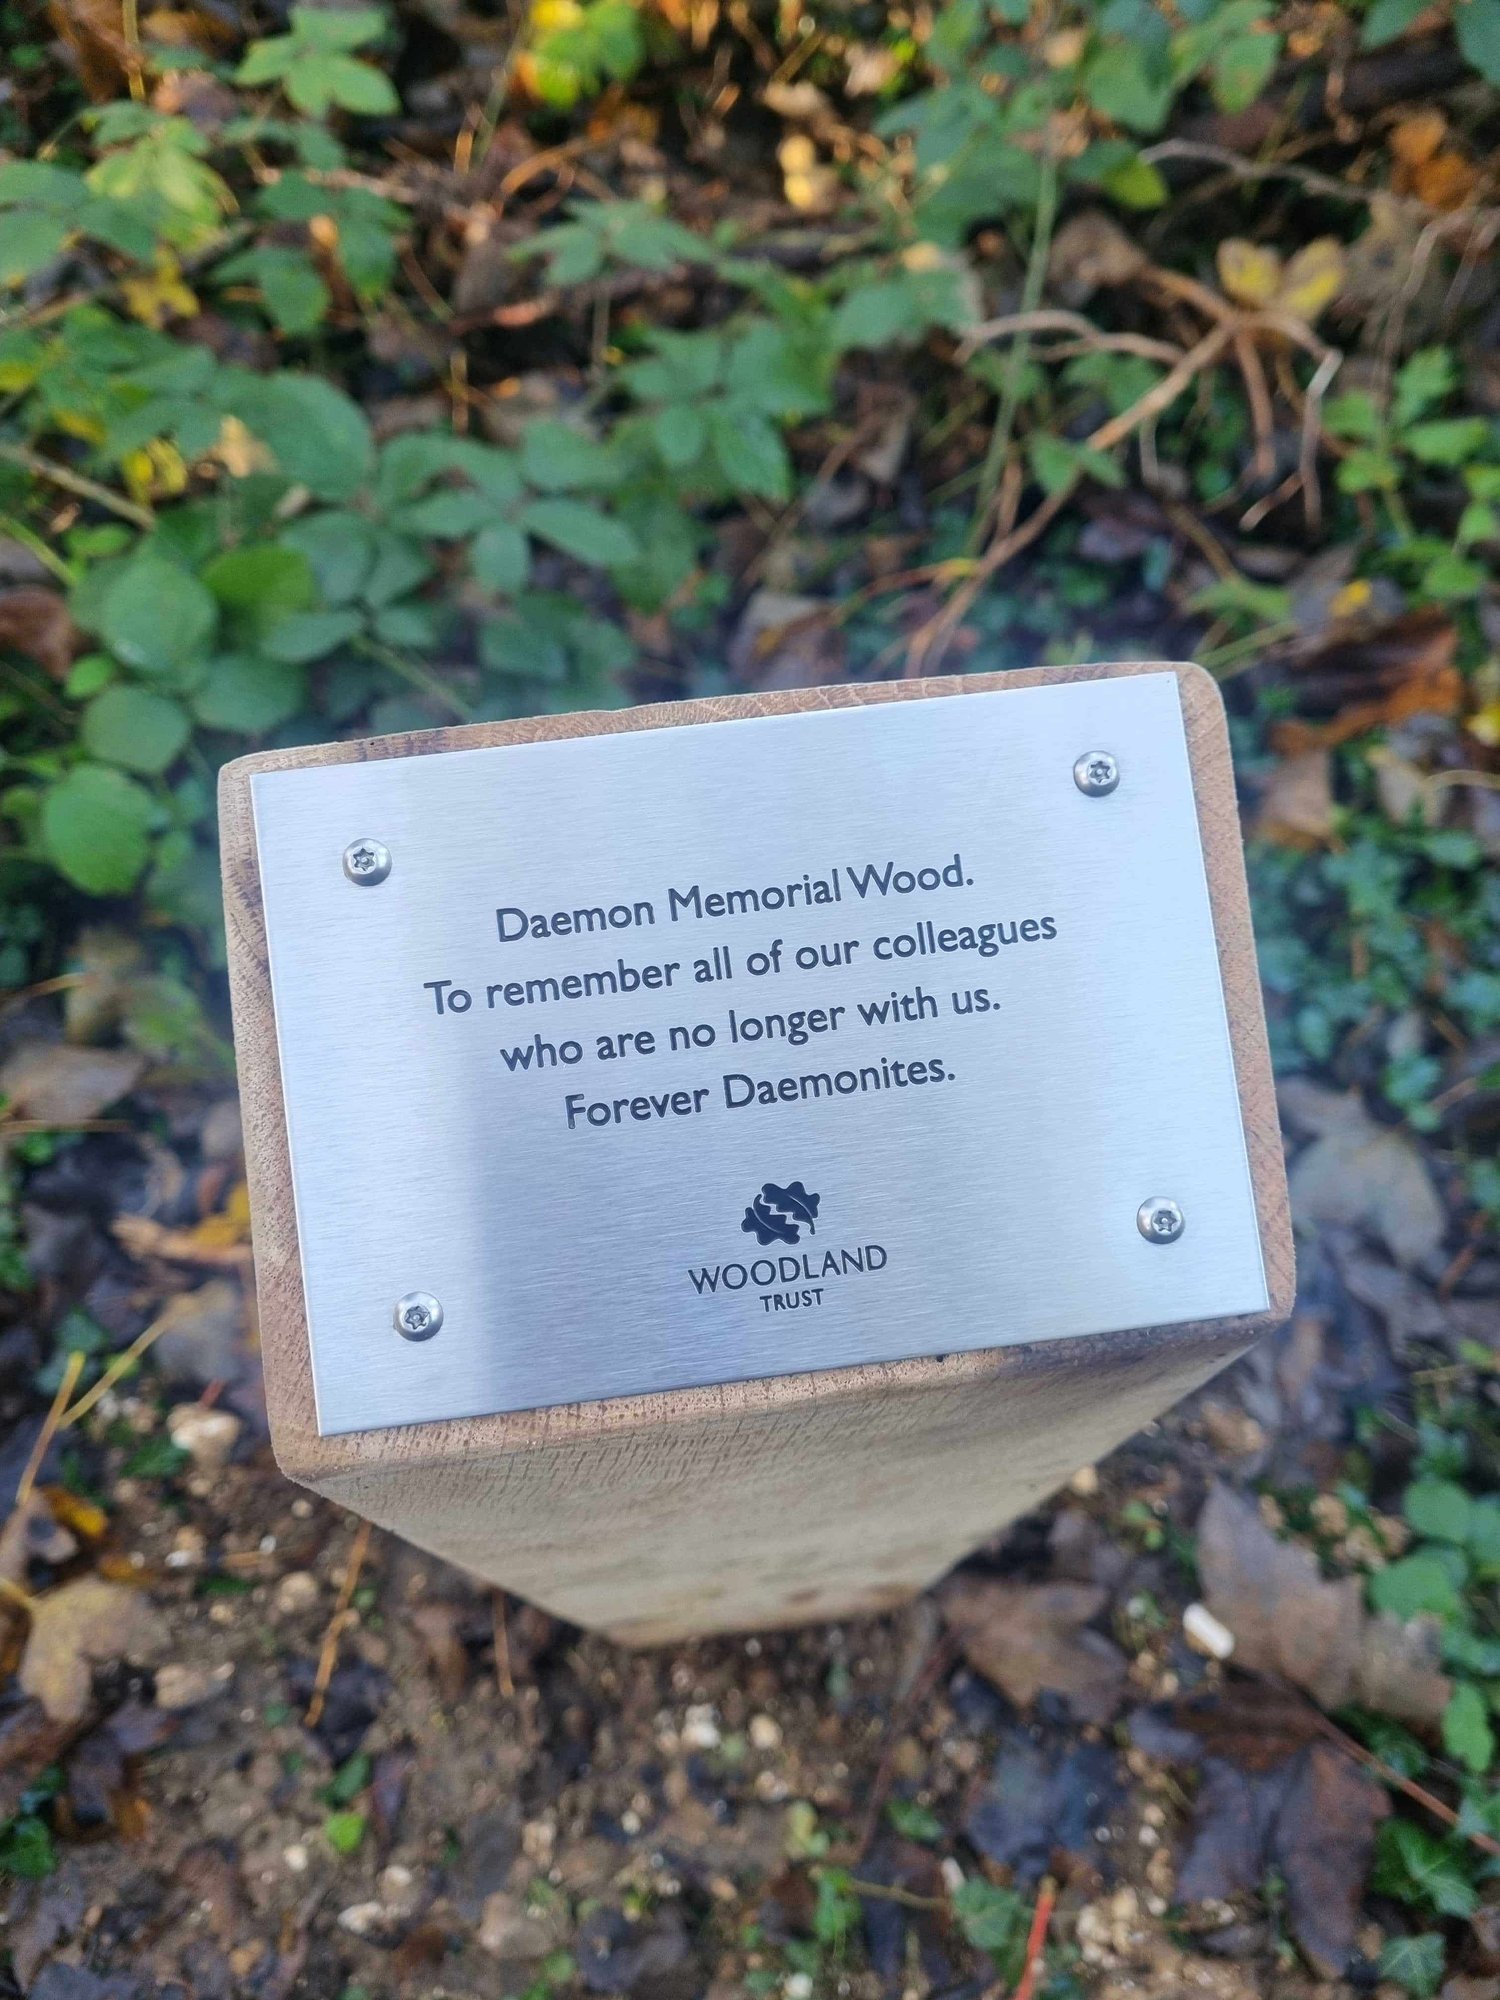 Deamon Memorial Wood